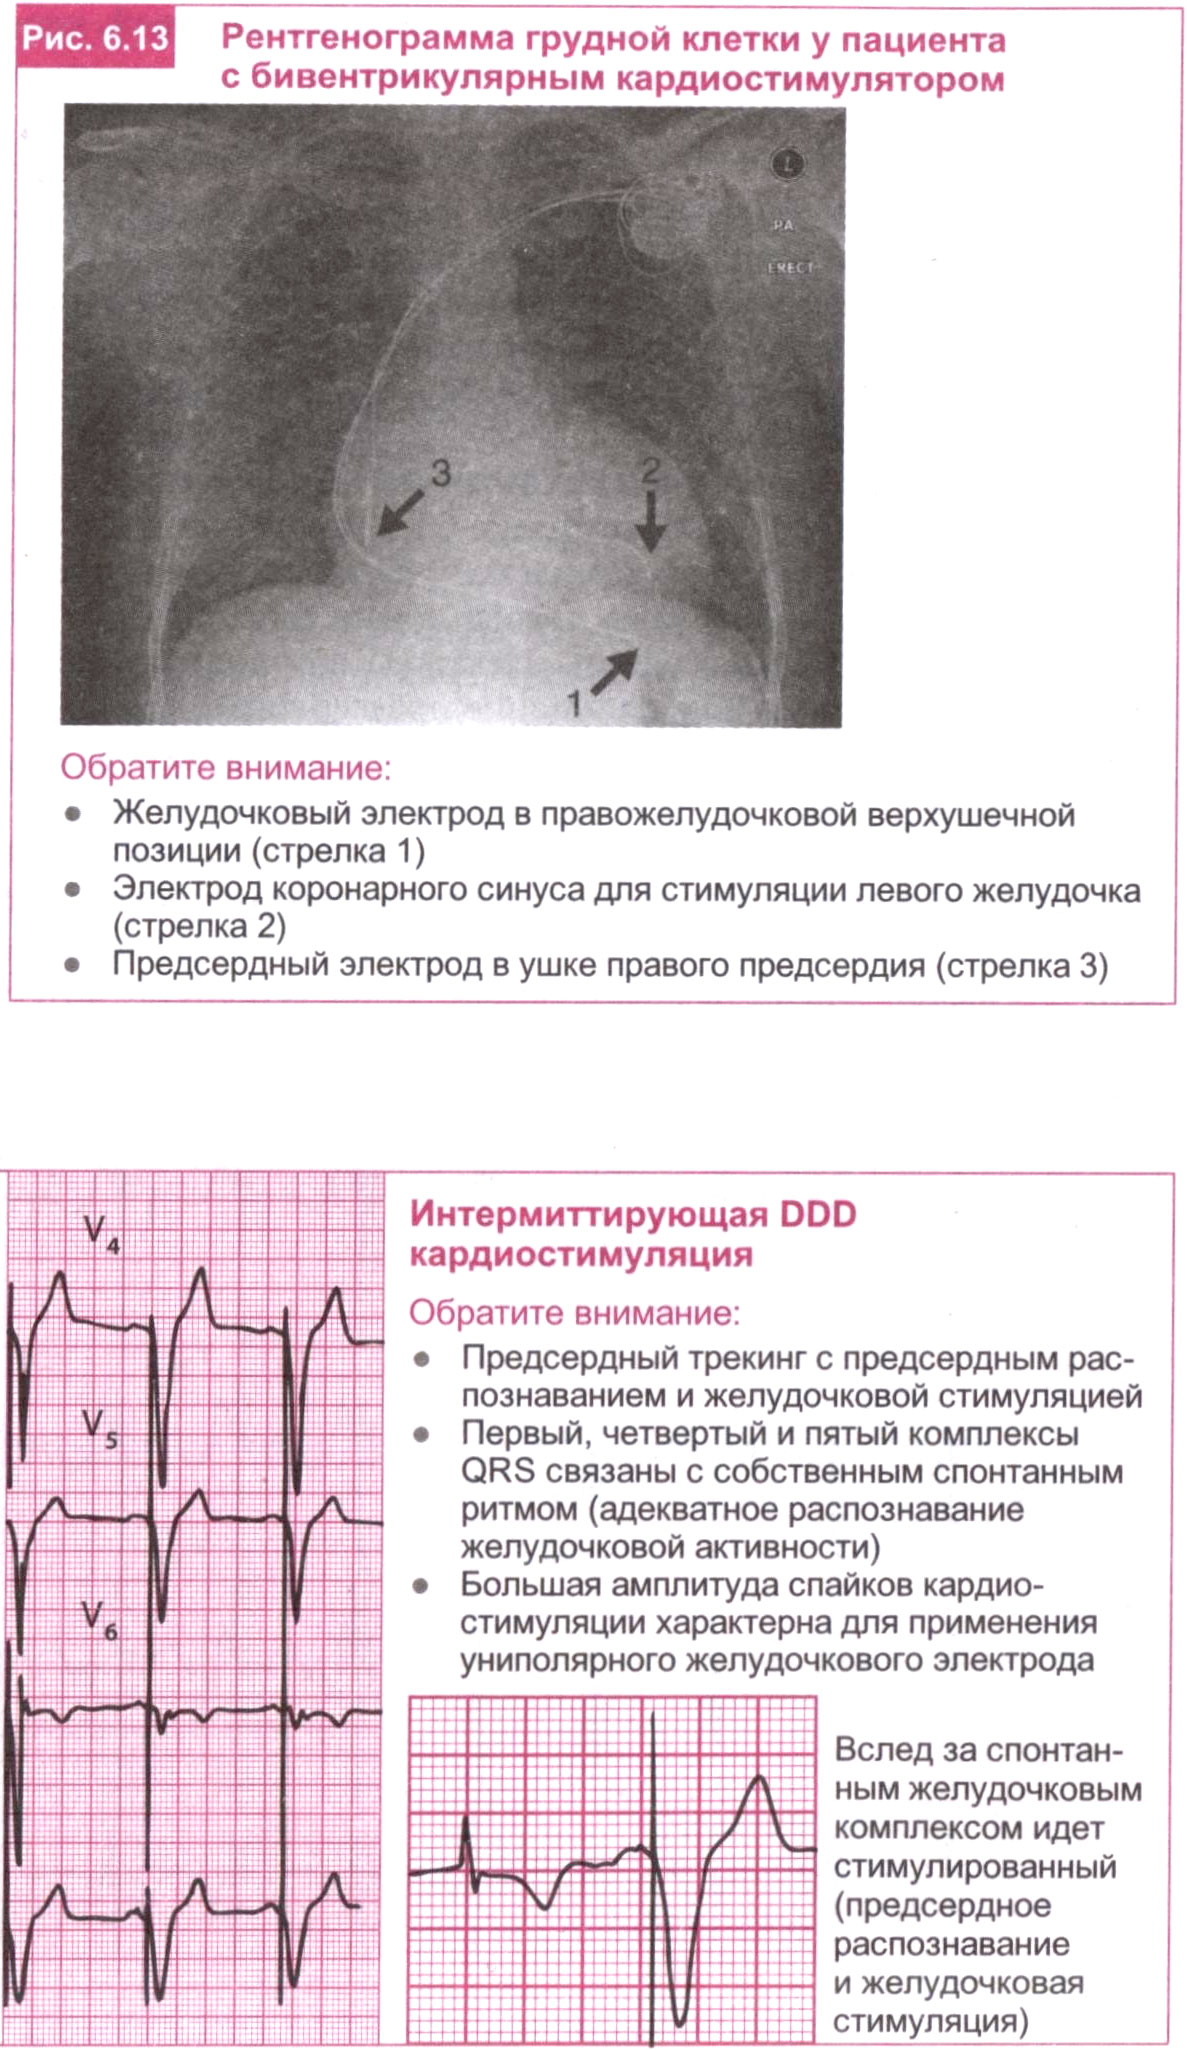 Рентгенограмма грудной клетки у пациента с бивентрикулярным кардиостимулятором